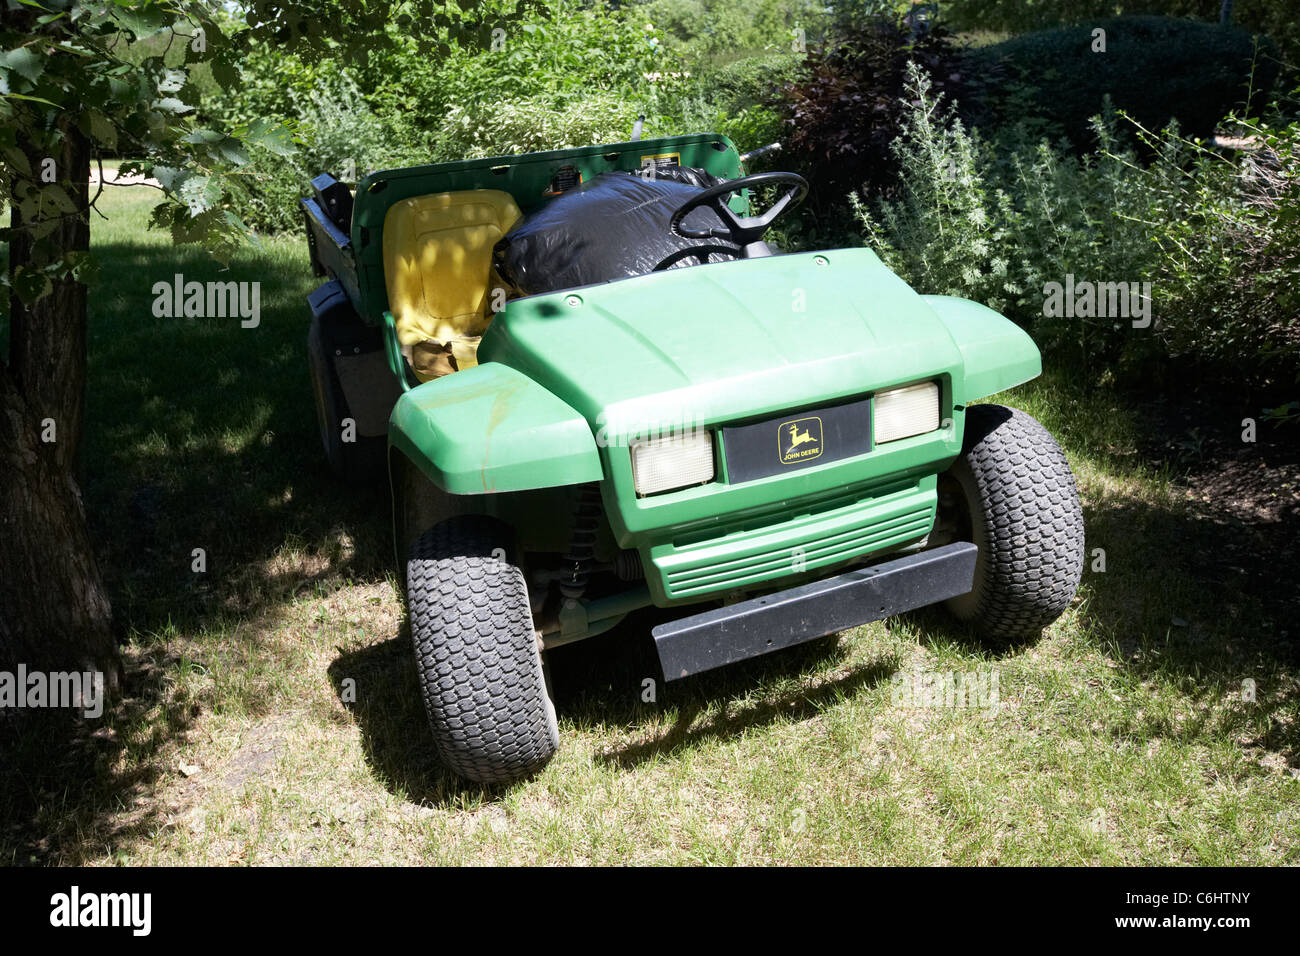 john deere gator golf carts used for gardening in local park winnipeg manitoba canada Stock Photo